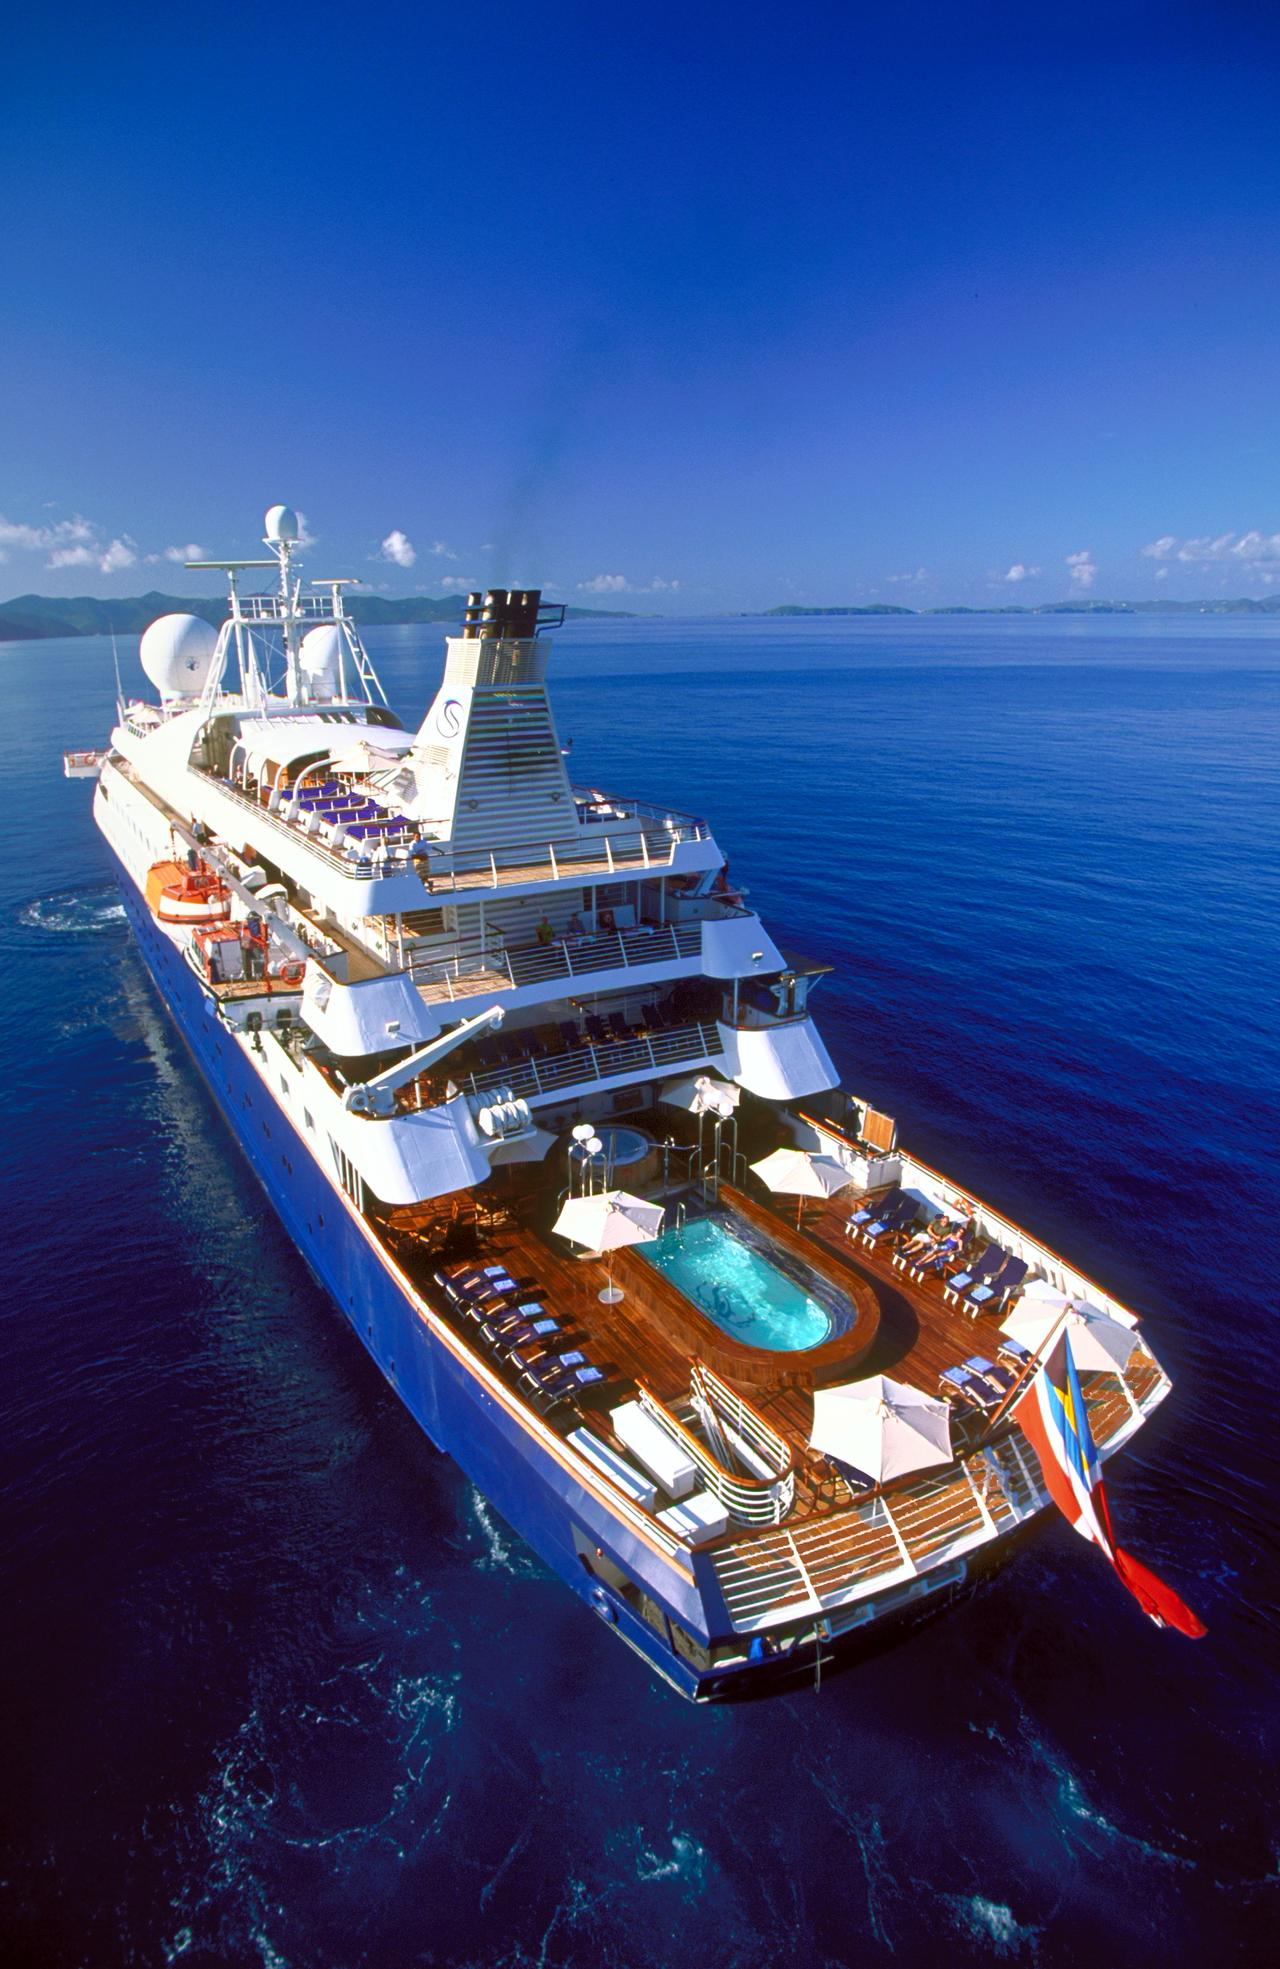 sea dream 1 cruise ship